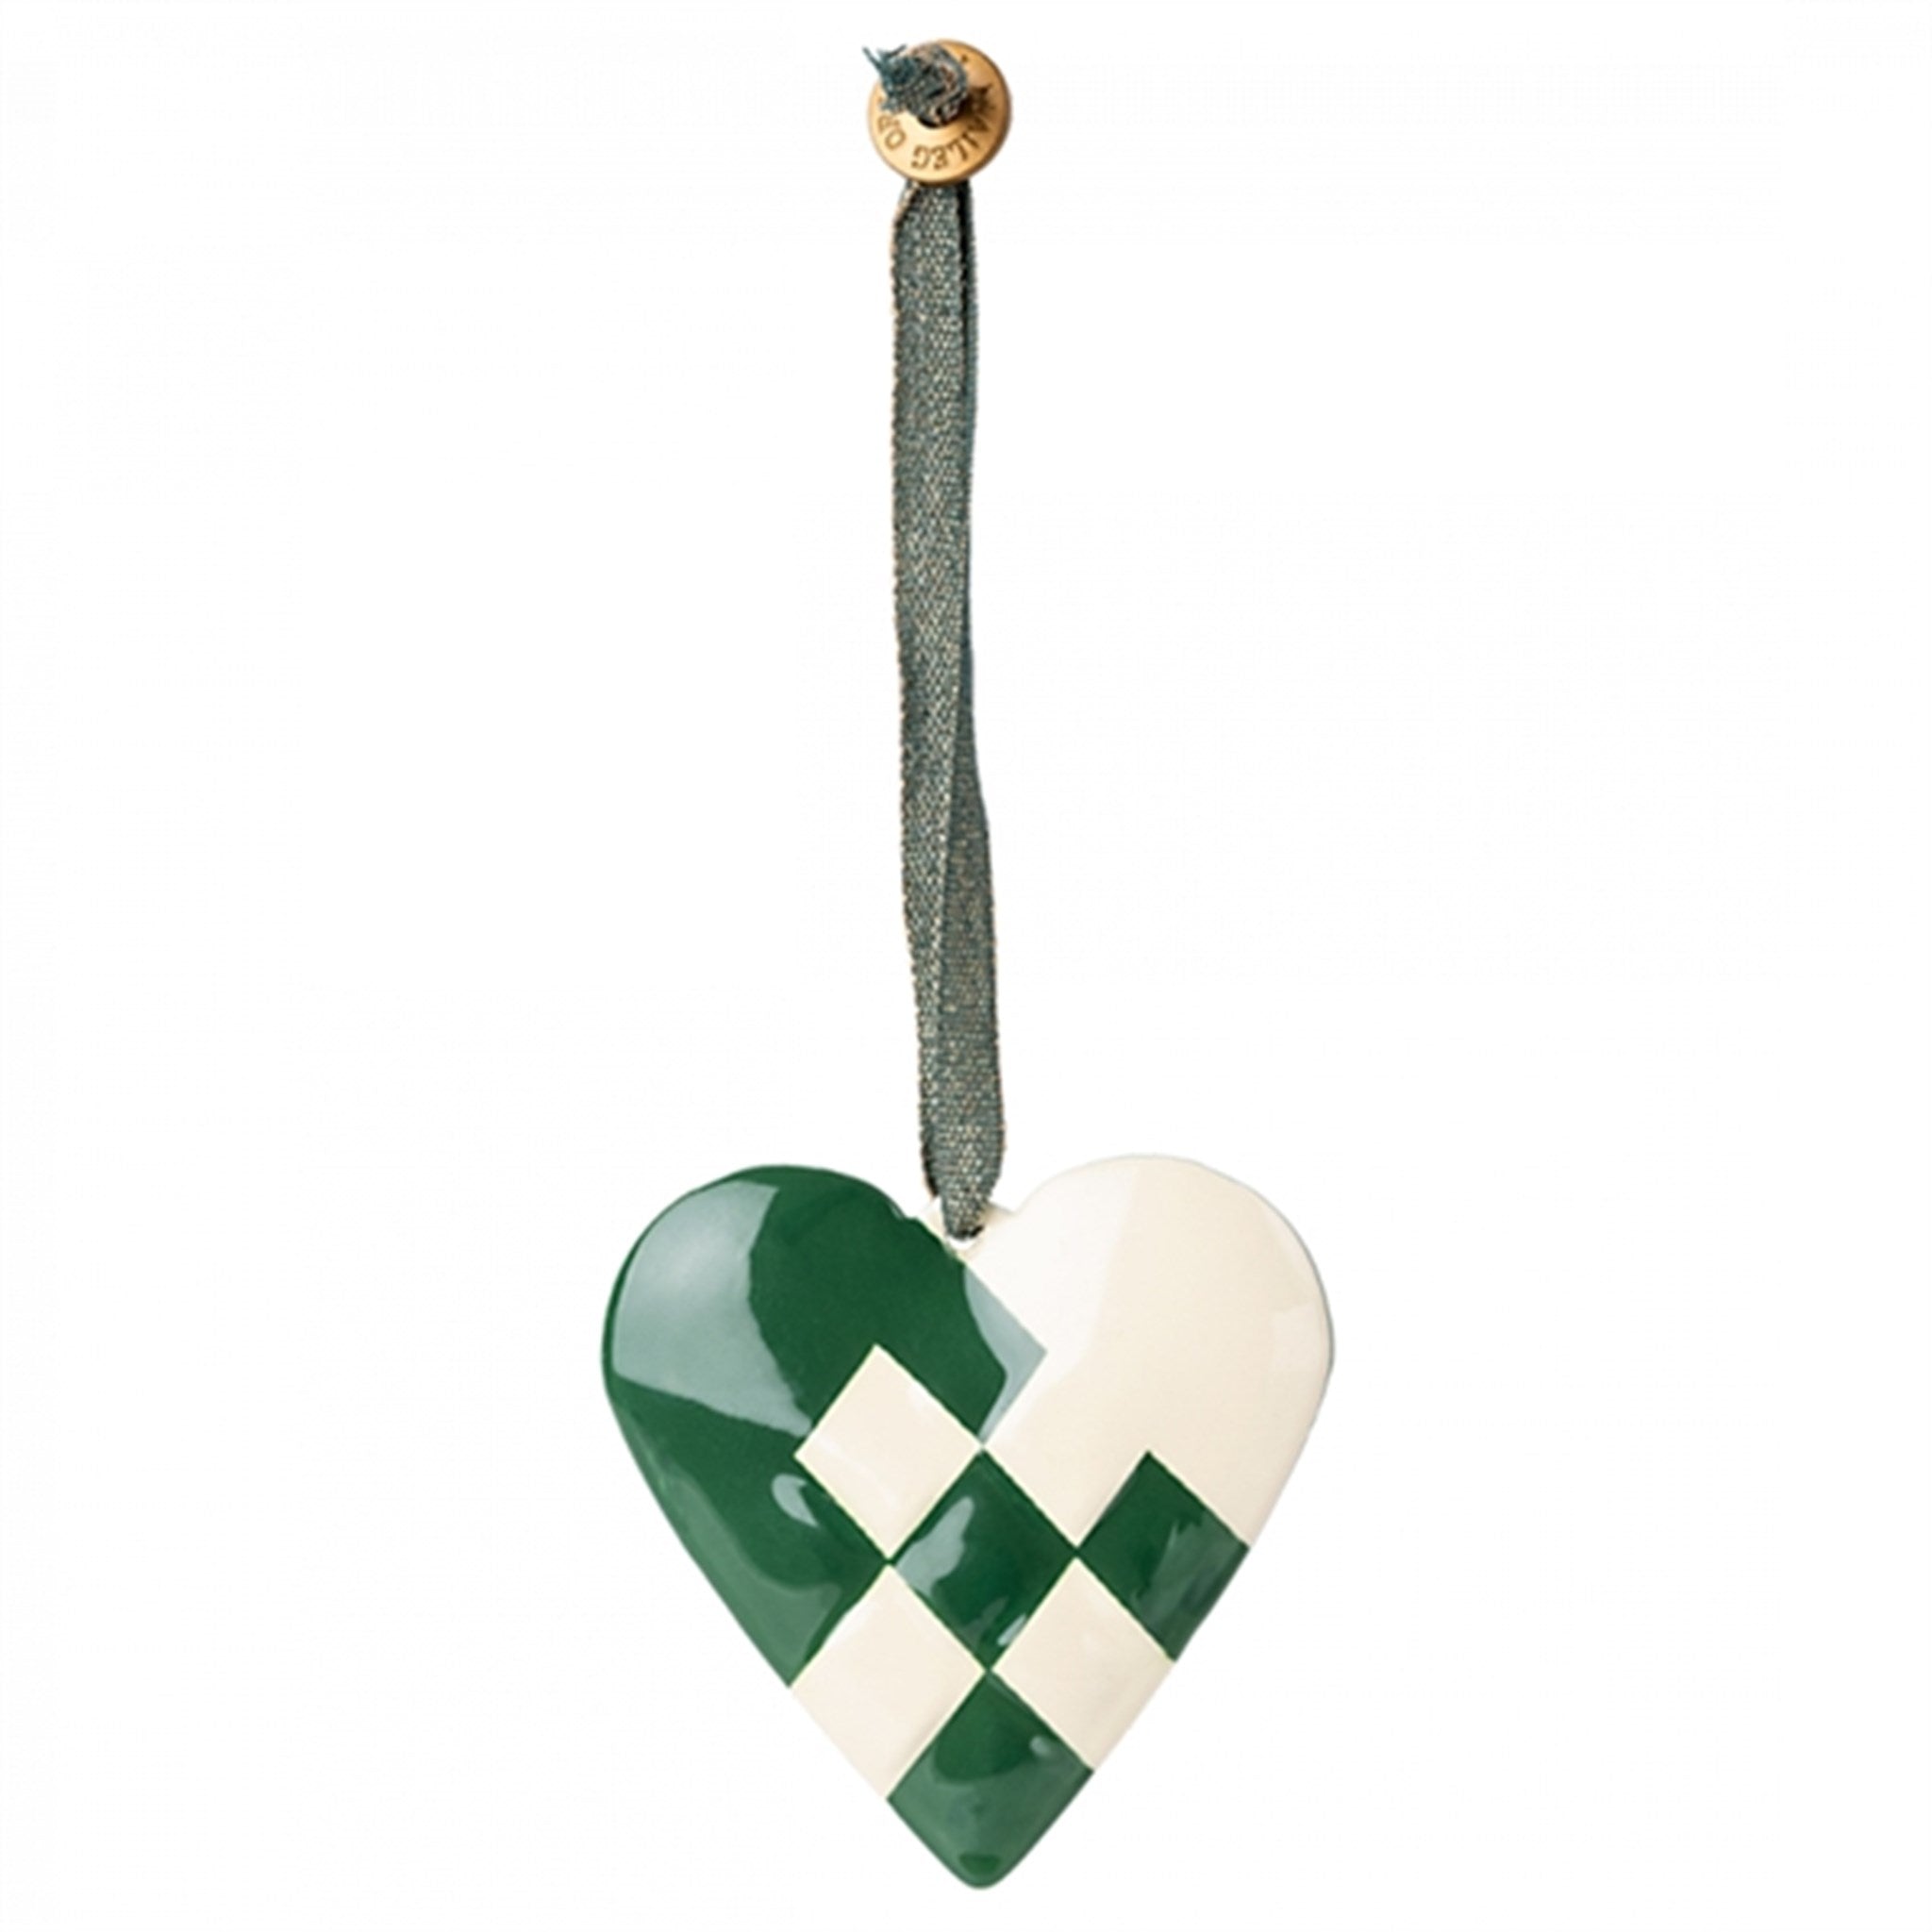 Maileg Metal Ornament, Braided Heart - Dark Green